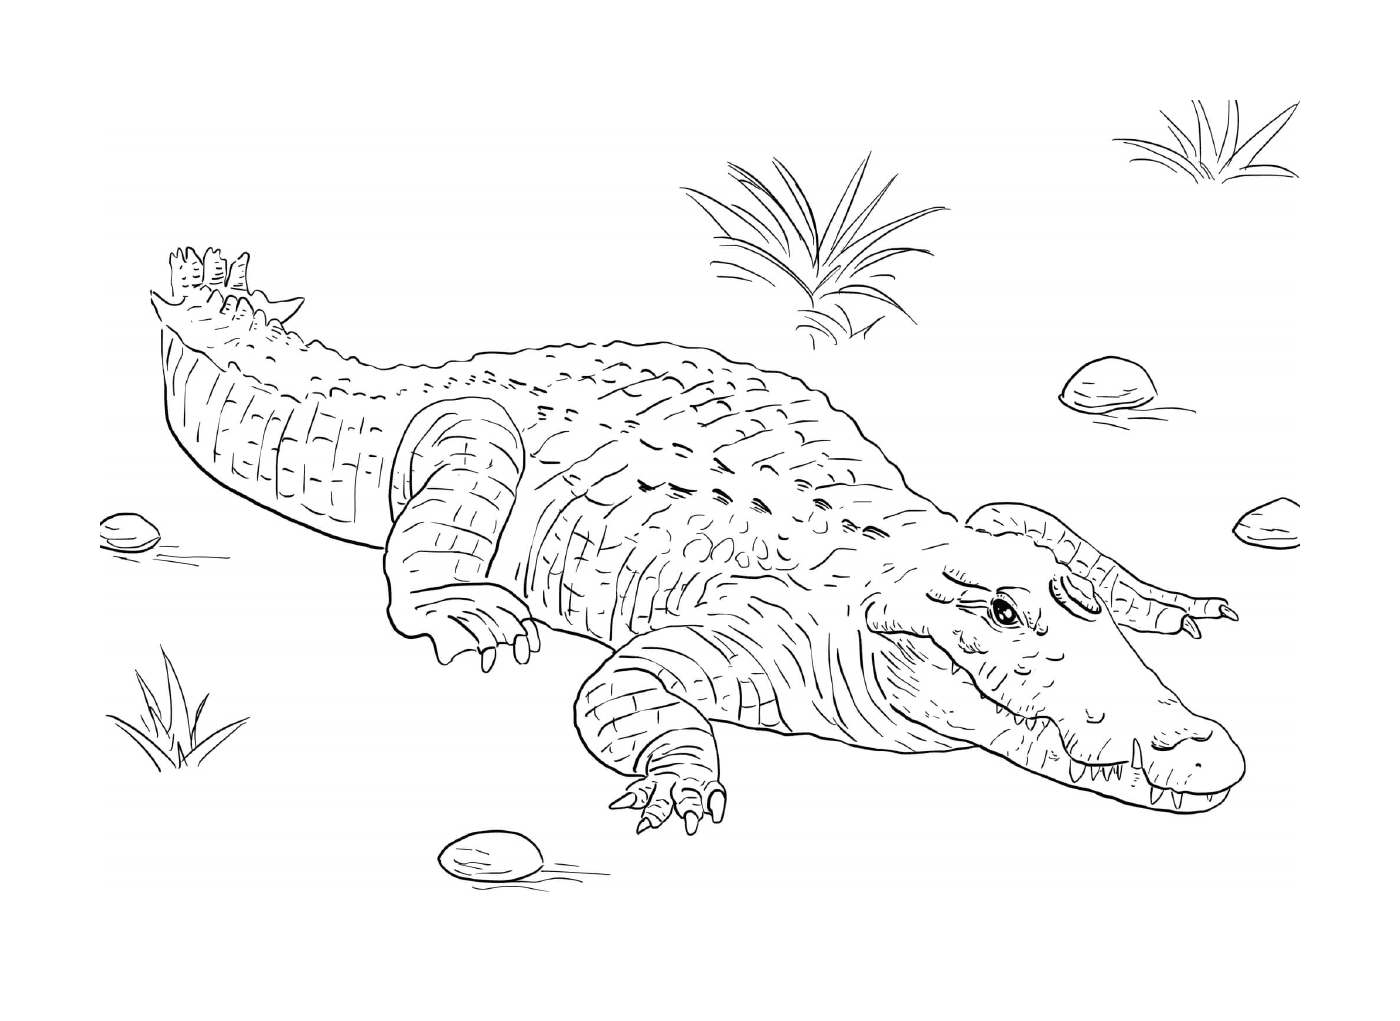  A Nile crocodile lying on the ground 